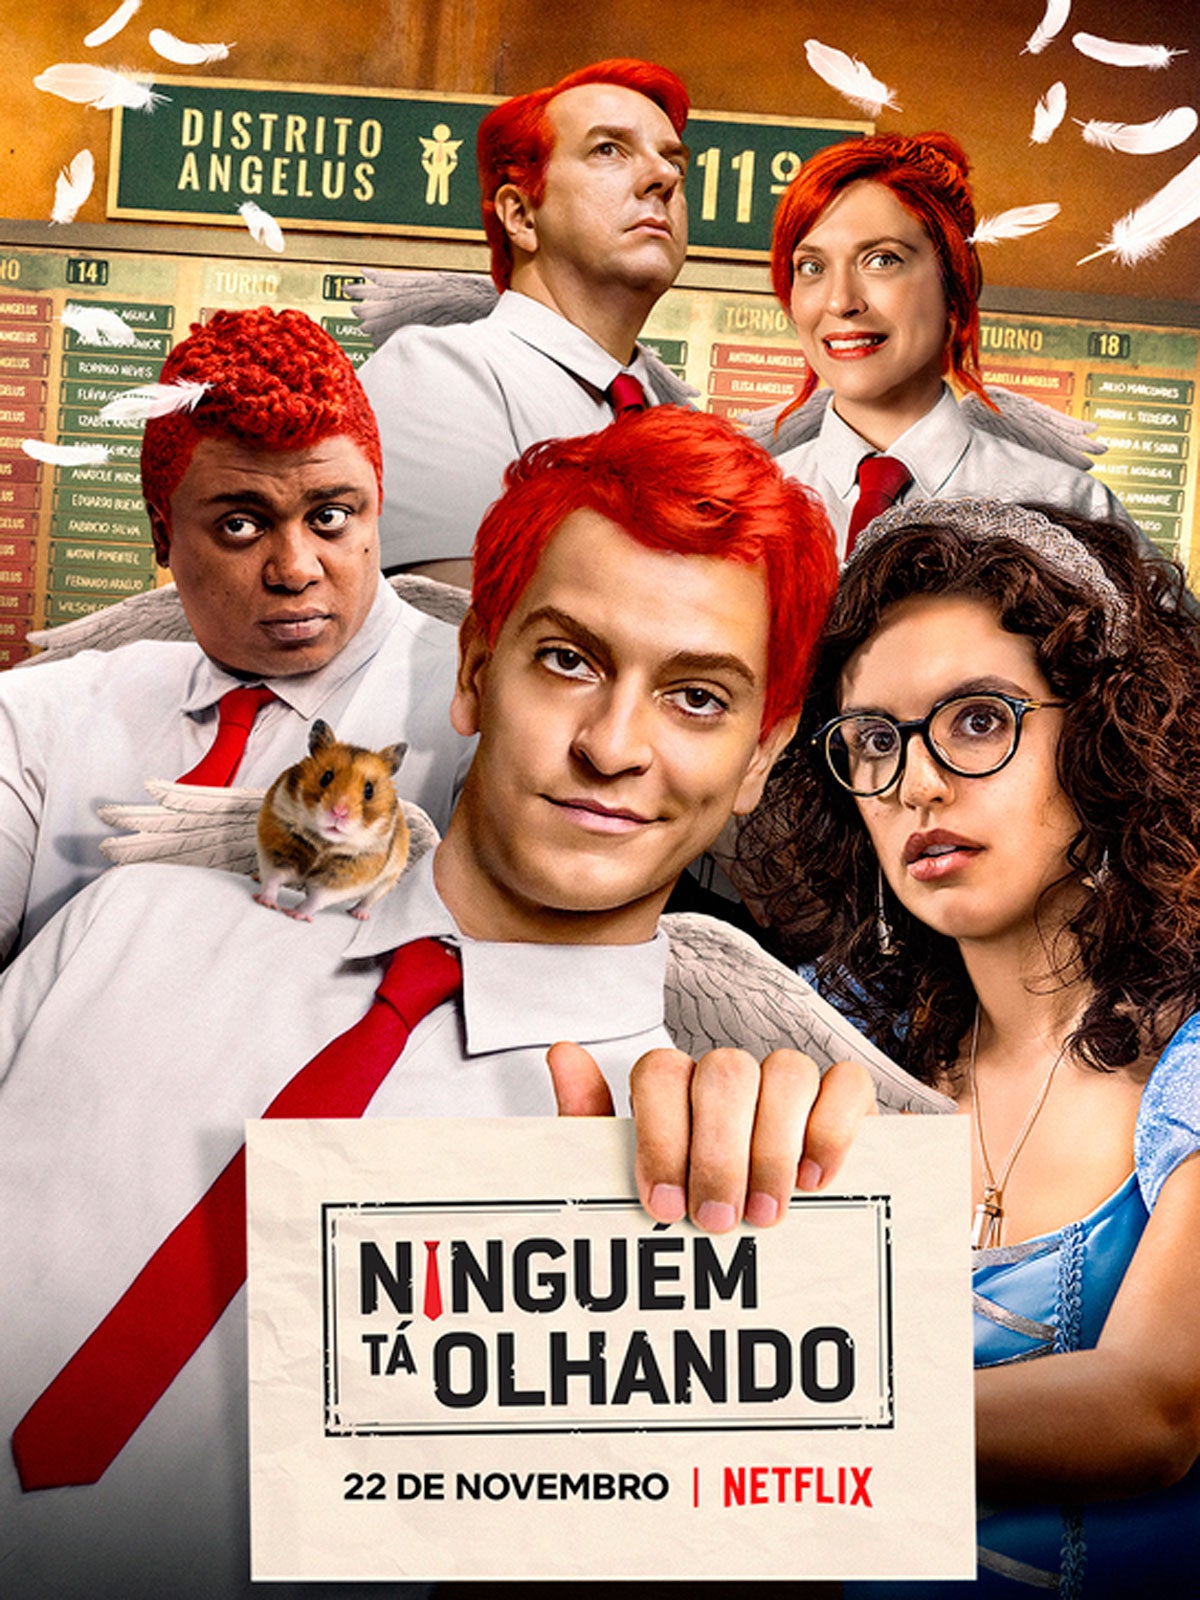 TV ratings for Ninguém Tá Olhando in India. Netflix TV series